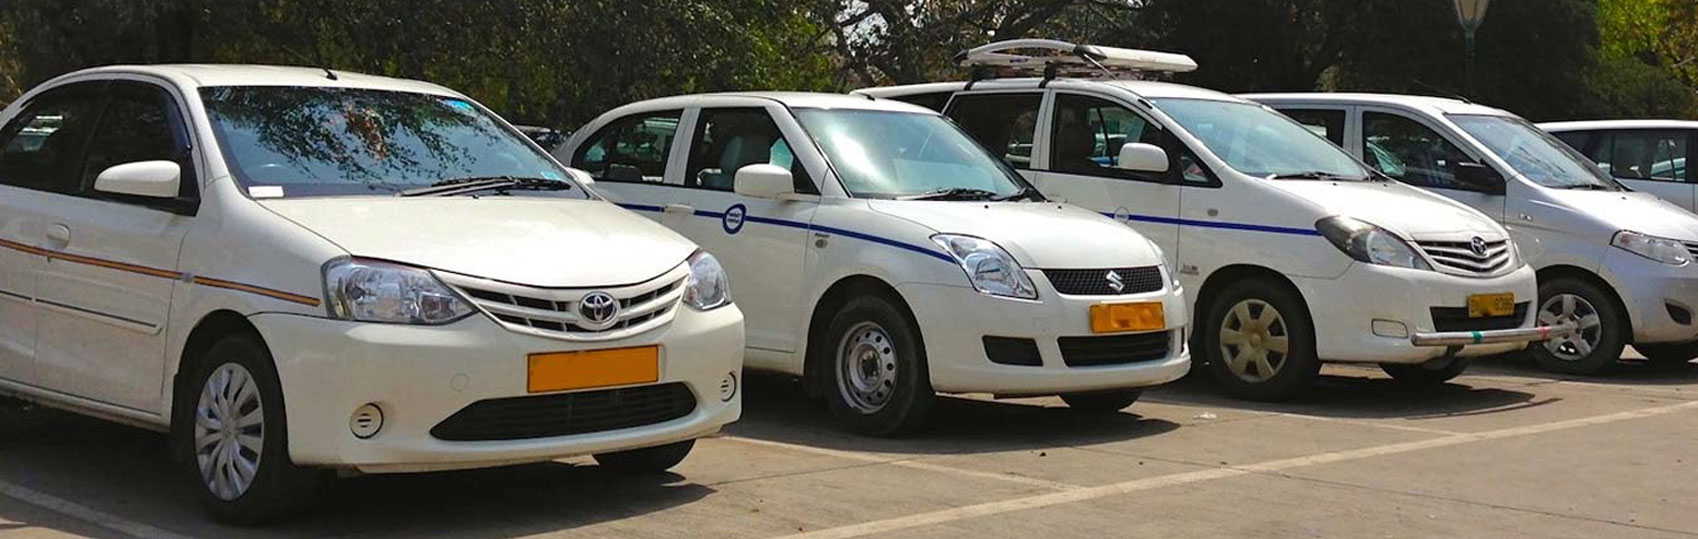 Shimla Taxi Services in Gurgaon